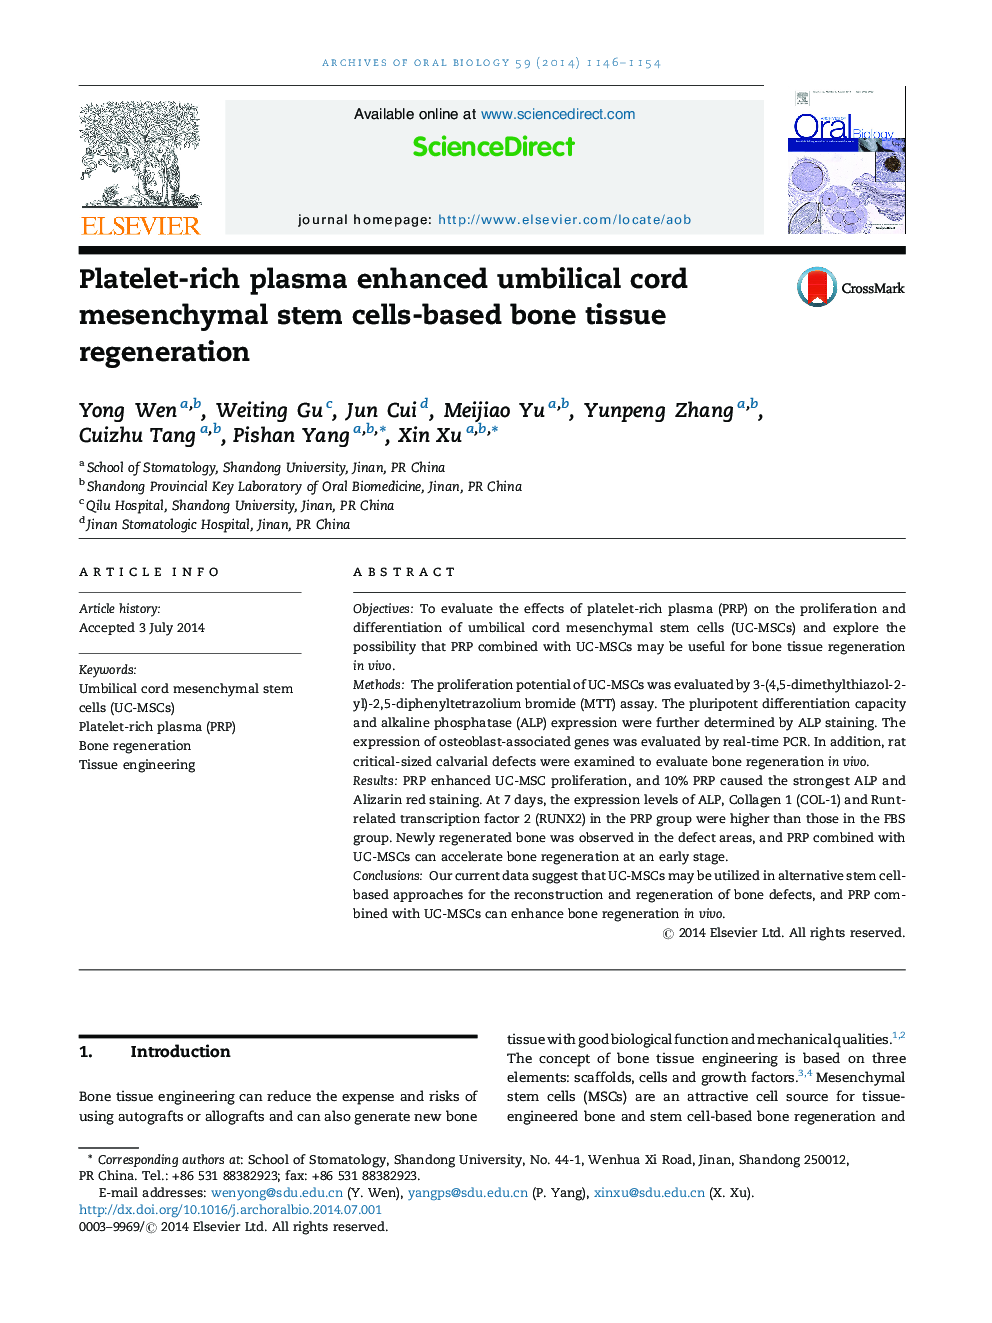 Platelet-rich plasma enhanced umbilical cord mesenchymal stem cells-based bone tissue regeneration